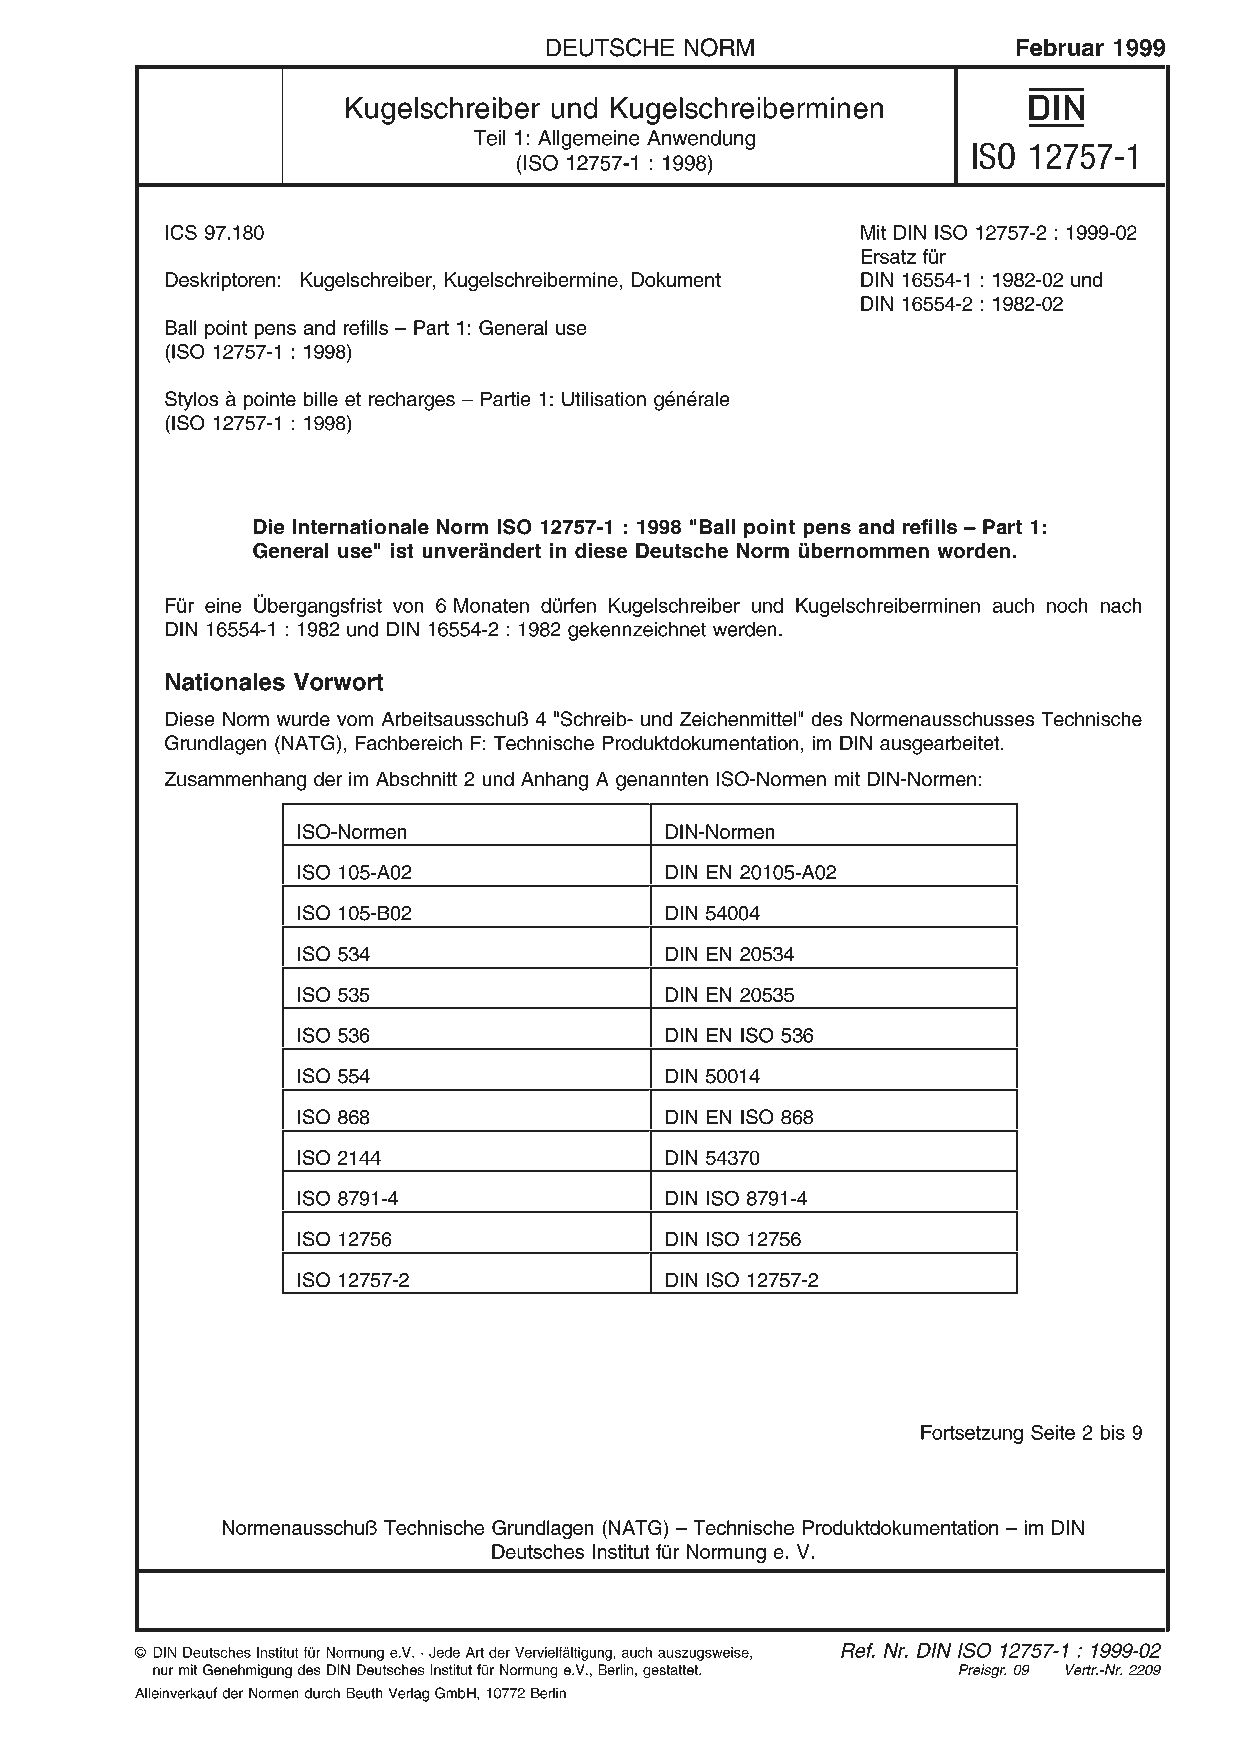 DIN ISO 12757-1:1999